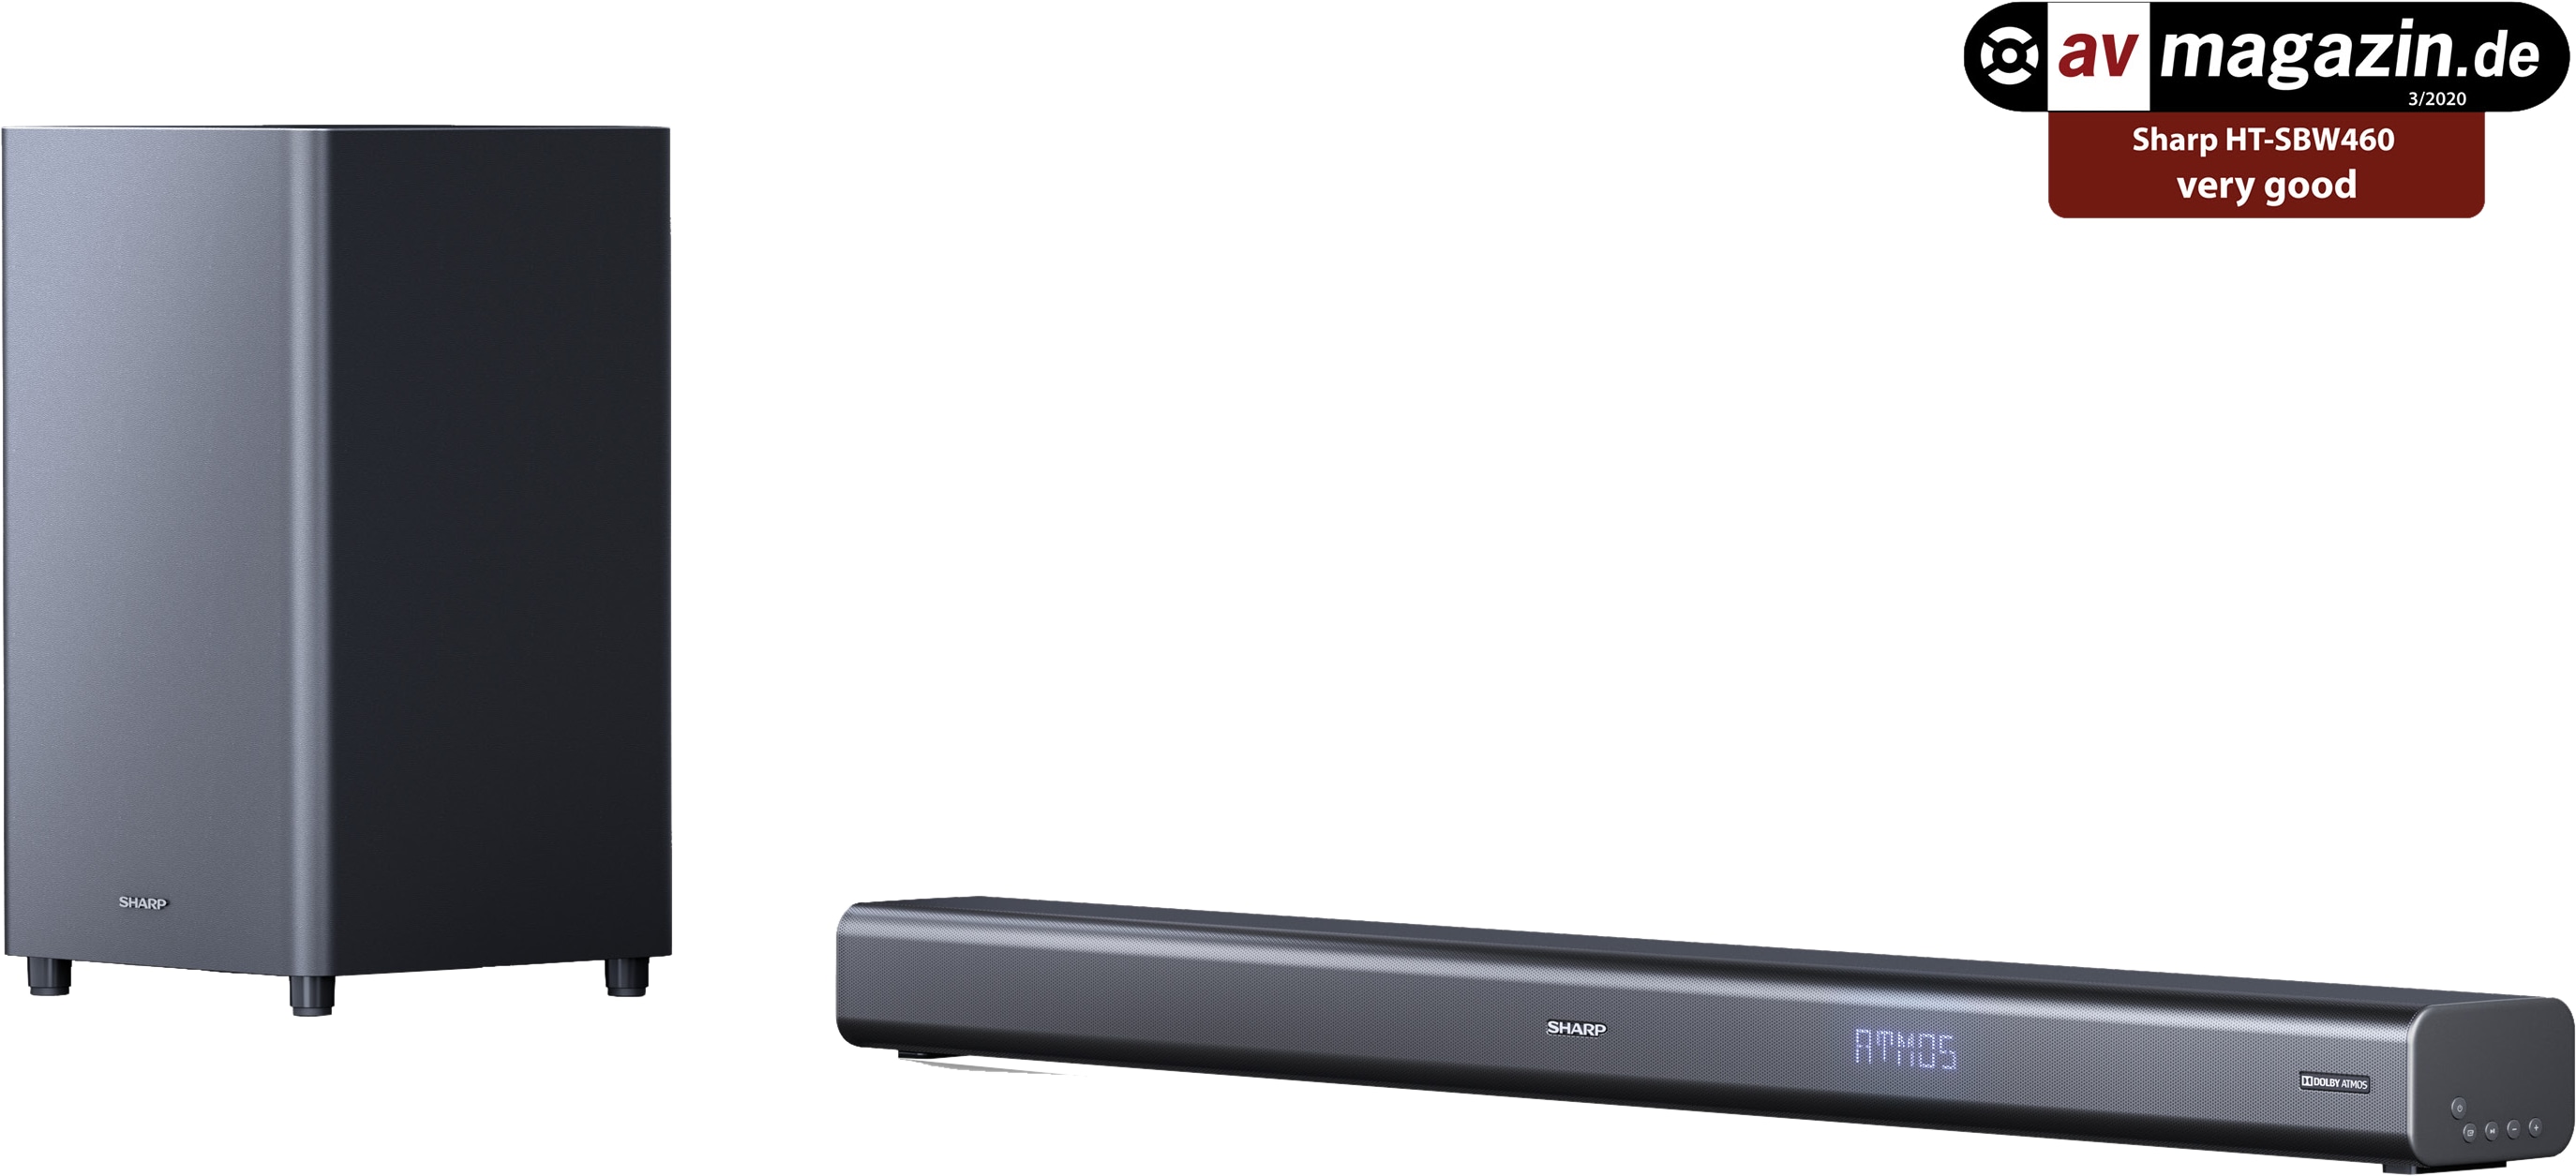 SHARP Soundbar-System HT-SBW460, Subwoofer, Dolby Atmos, 4K, 440 W